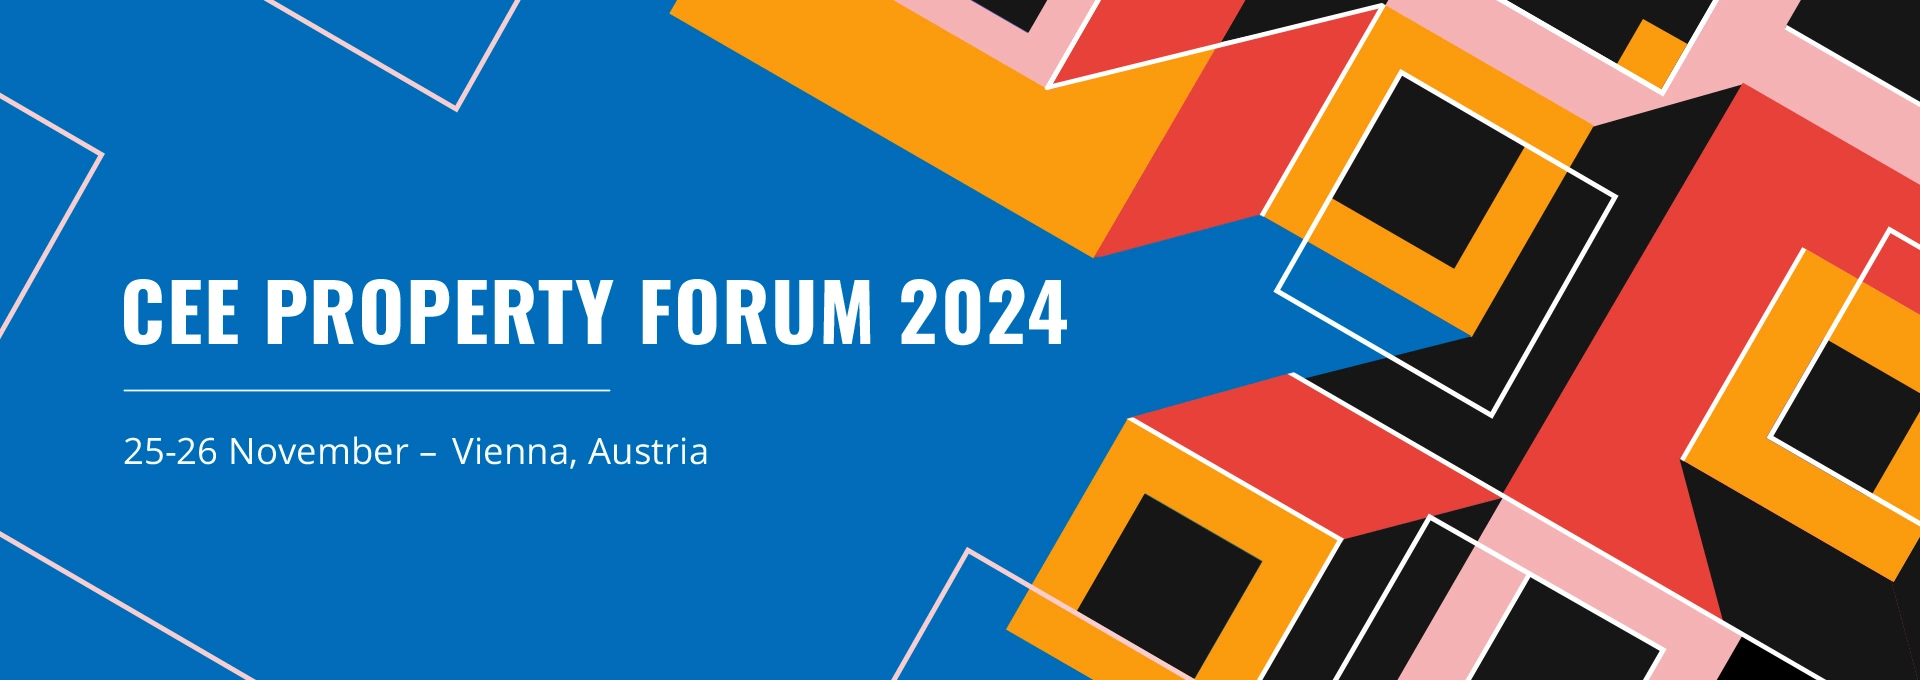 CEE Property Forum & Awards Gala 2024 - Vienna, Austria